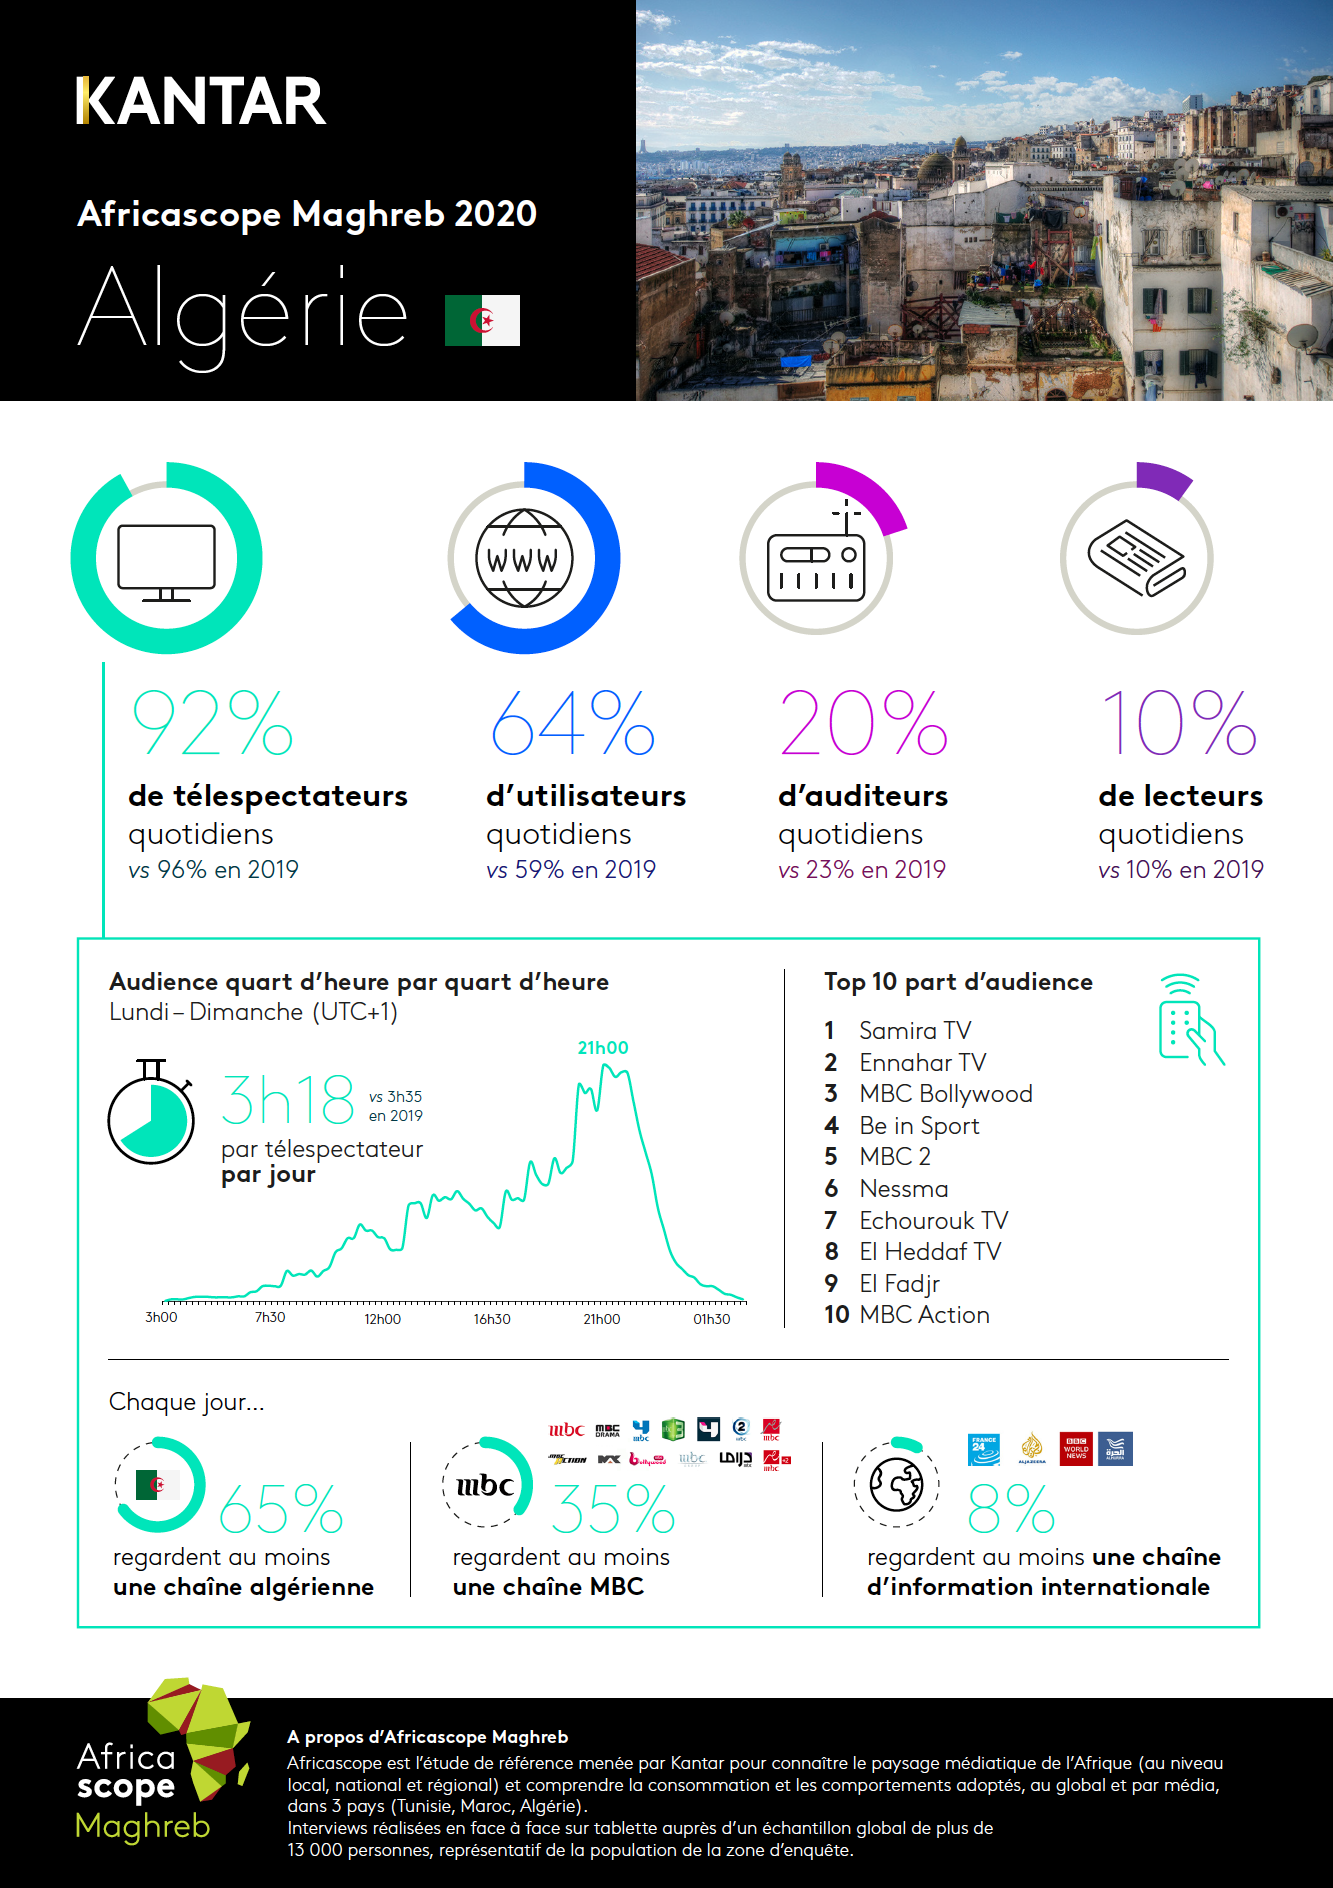 Kantar publie les résultats Africascope Maghreb 2020